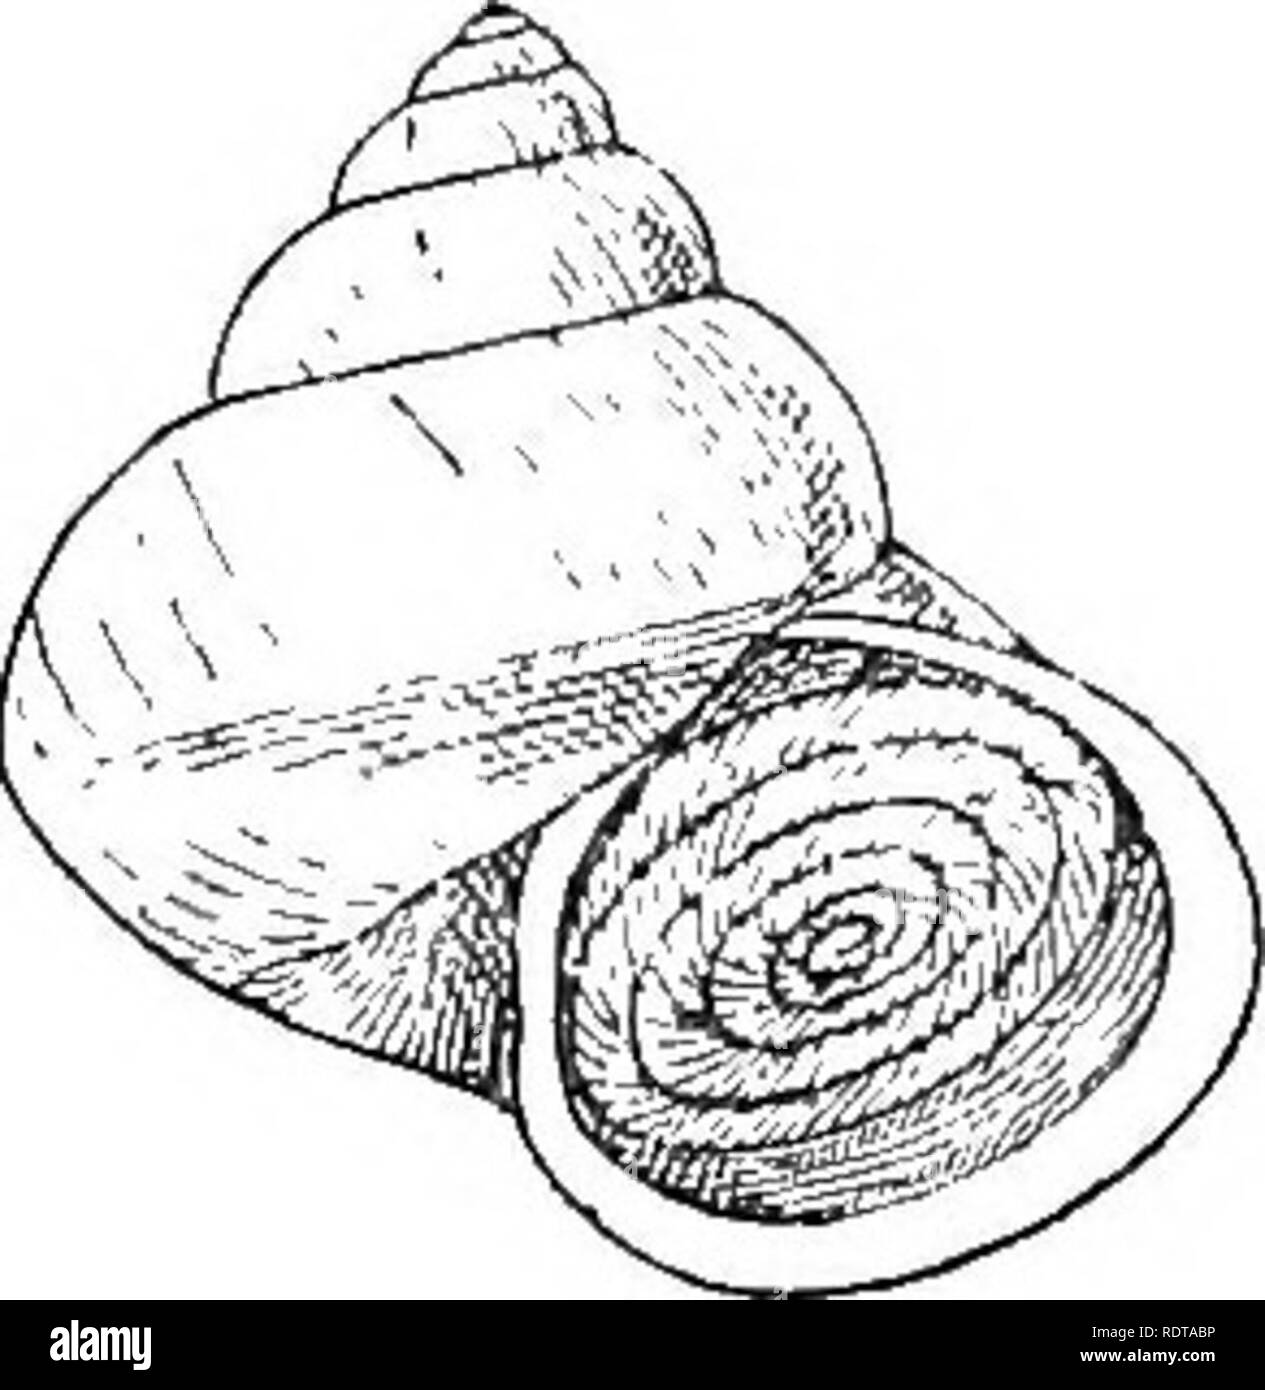 . Mollusca ... Mollusks. LBPTOPOMA. 5 Cyelnstoma maculosa, Souleyet, Revue Zool. iv, 1842, p. 101; Eydoux &amp; Souleyet, Voy. Bonite, ii, 1852, p. 539, pi. 30, figs. 38-. 41. Dermatocera maculosa, Adams, Gen. Rec. Moll, ii, 1865, p. 282; Pfeiffer, Mou. Pneum. Suppl. 1, 1858, p. 78. Cyclostoma azaolanum. Jay, Cat. Shells, Ed. 4,1850, p. 254. &quot; T. perforata, globoso-conica, tenuis, concentrice confertissime lineata, diaphana, albida, saepe castaneo punctata et strigato- maculata; spira conica, acuta; anfr. 5| couvexi, ultimus superne carinis nonnullis obsoletis, ad peripheriam carina 1 val Stock Photo